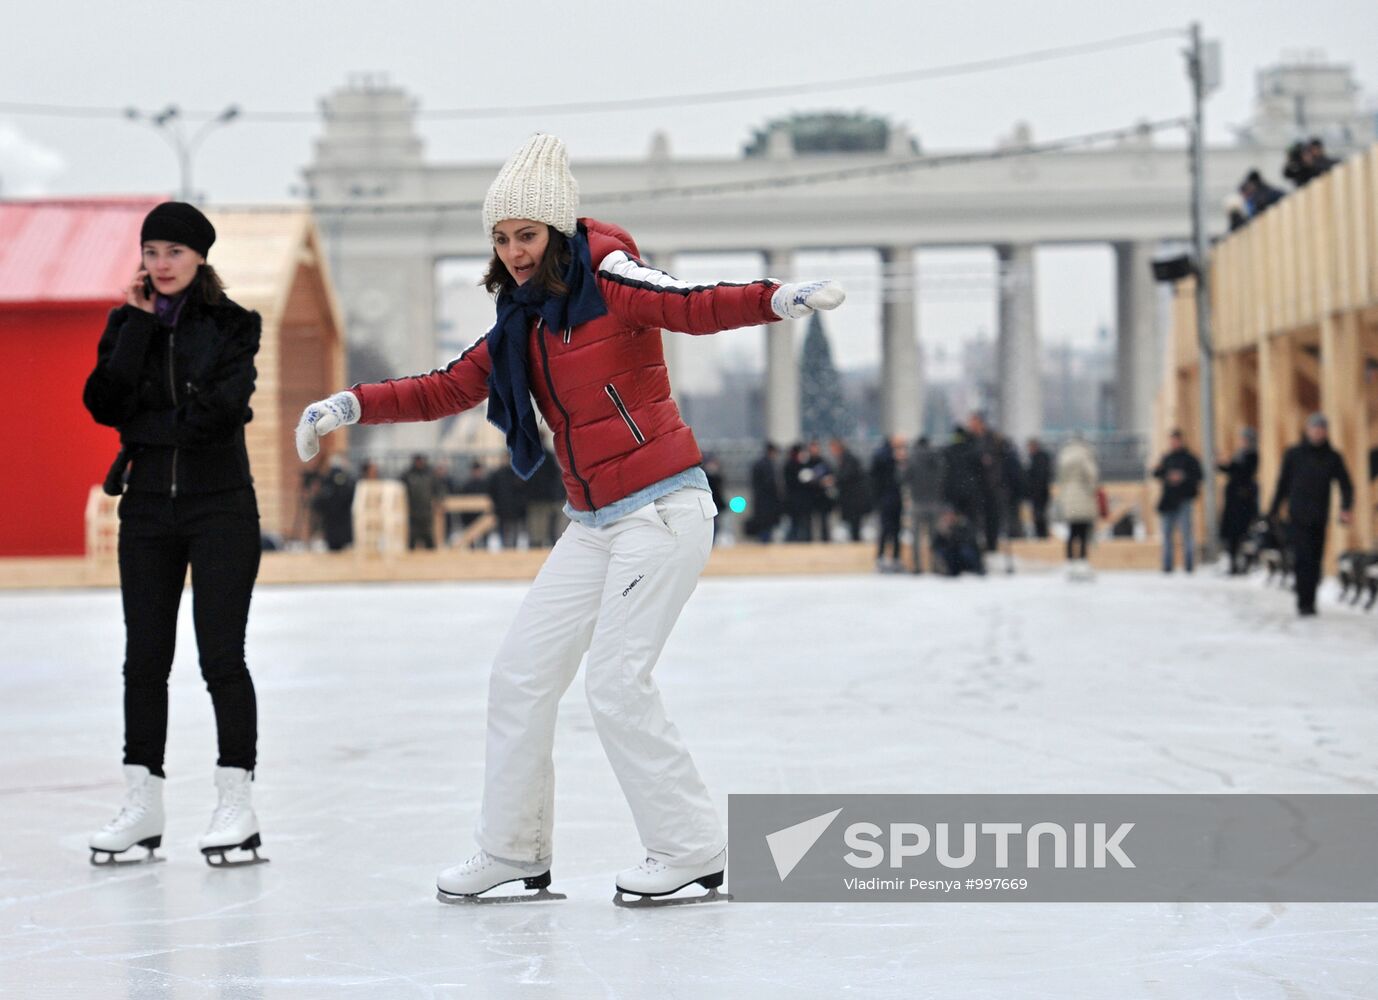 Skating rink opens at Moscow's Gorky Park